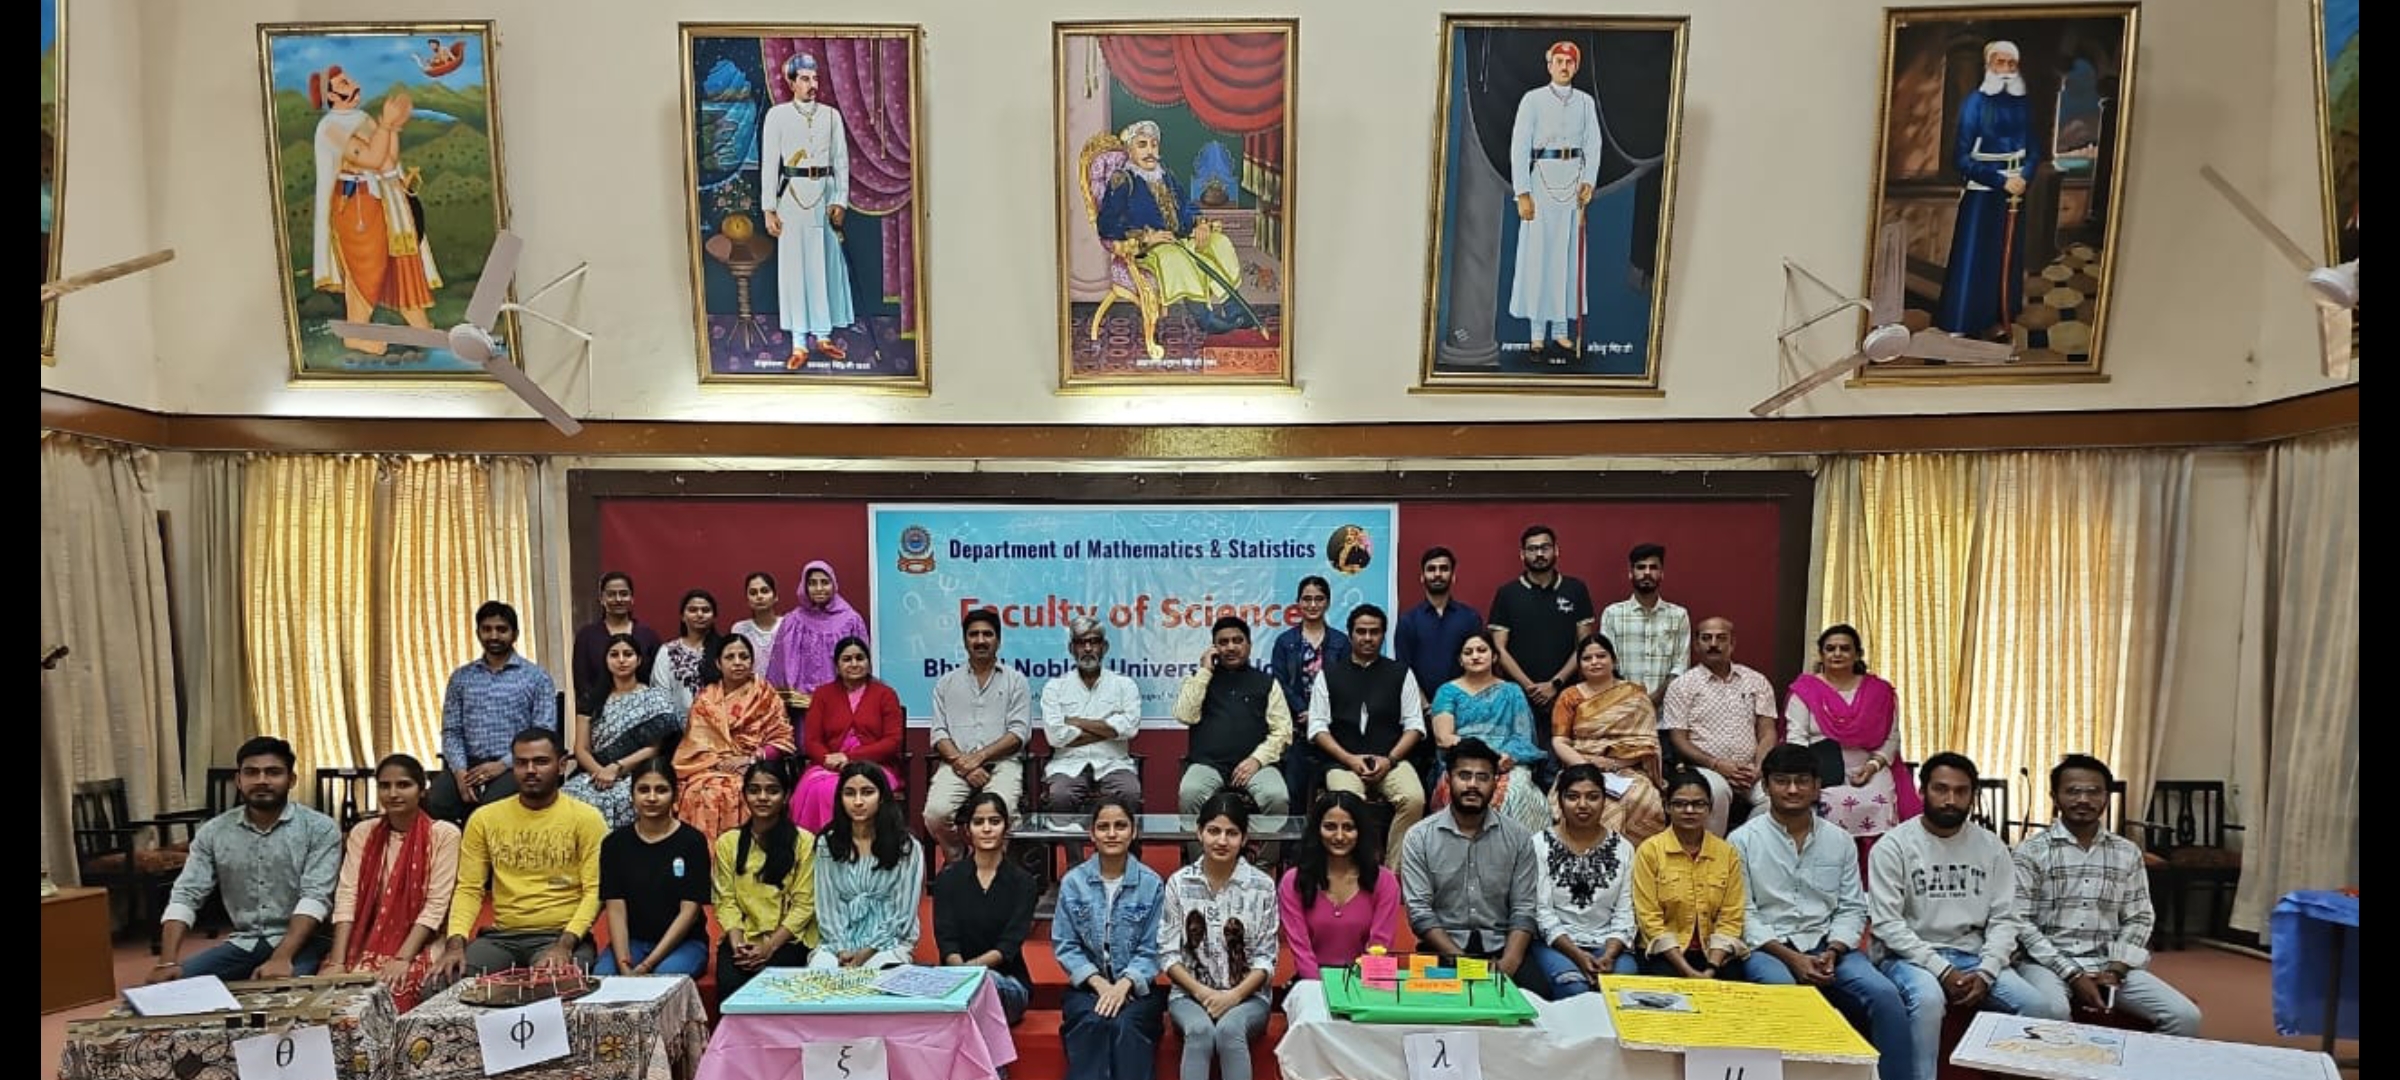 International Mathematics Day Celebrated at Bhopal Nobles Postgraduate College